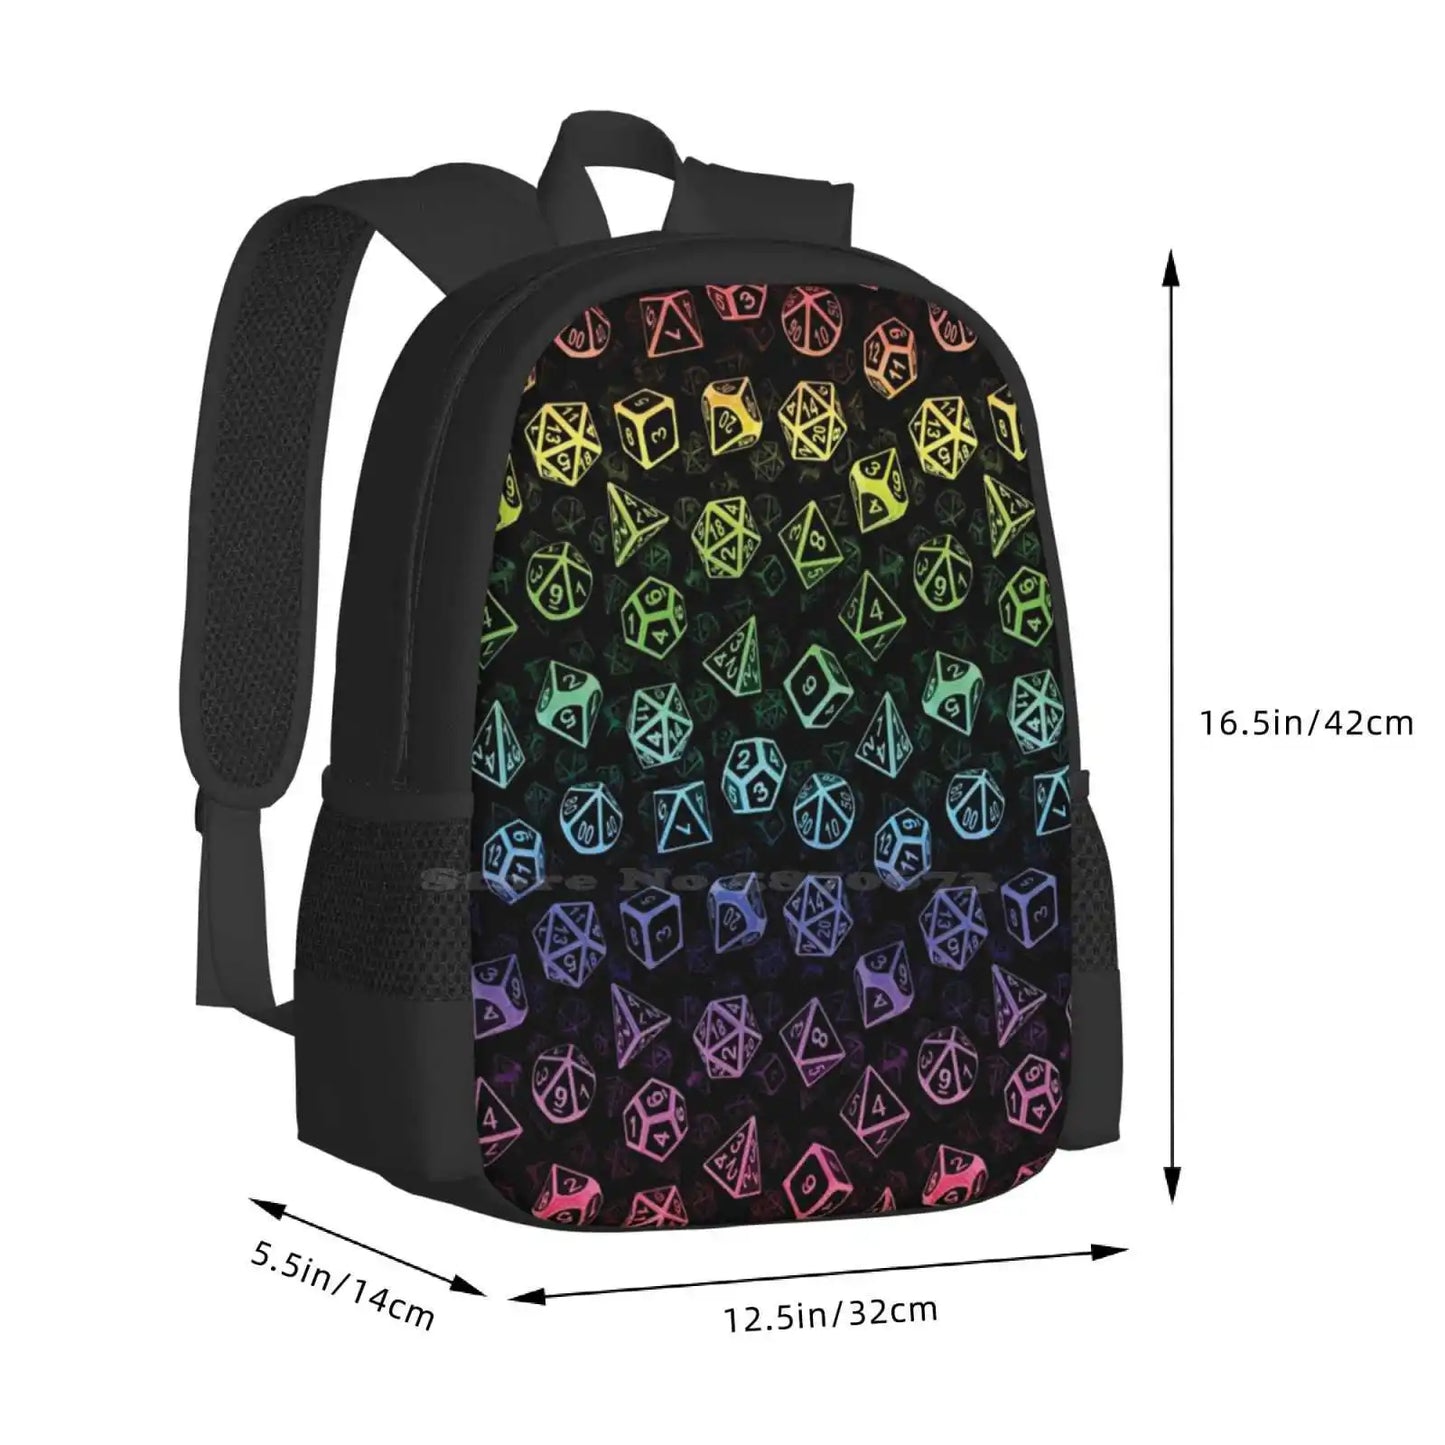 D20 Dice Set Pattern ( Rainbow ) Pattern Design Bagpack School Bags D20 Dnd And Dragons Pathfiner Starfinder Dice Set Nerd Geek